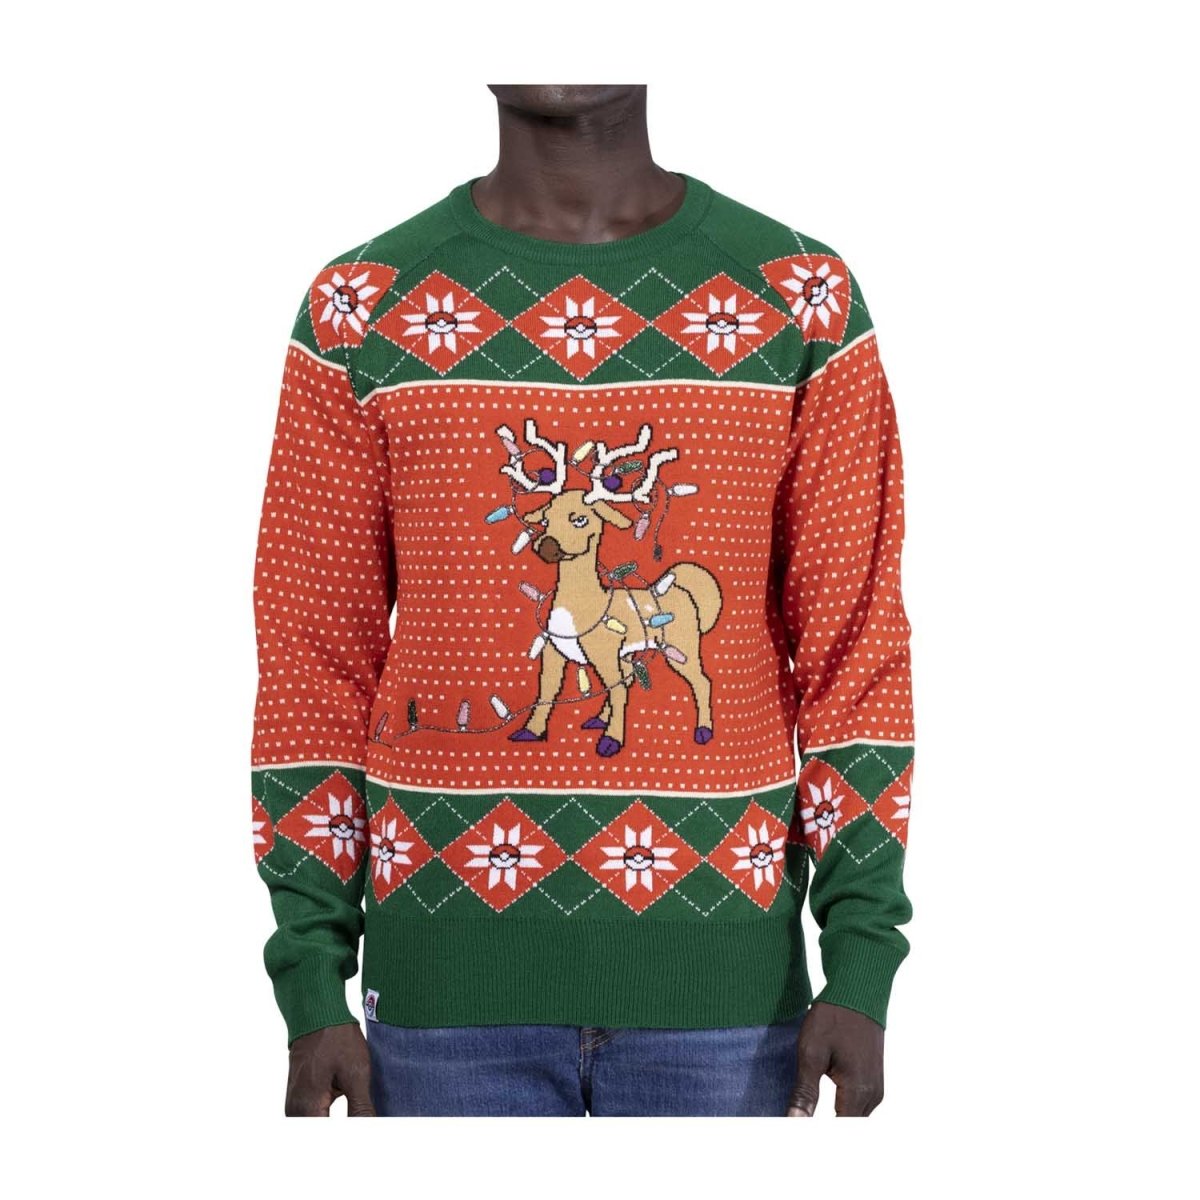 Stantler Holiday Lights Knit Sweater - Adult | Pokémon Center Official Site